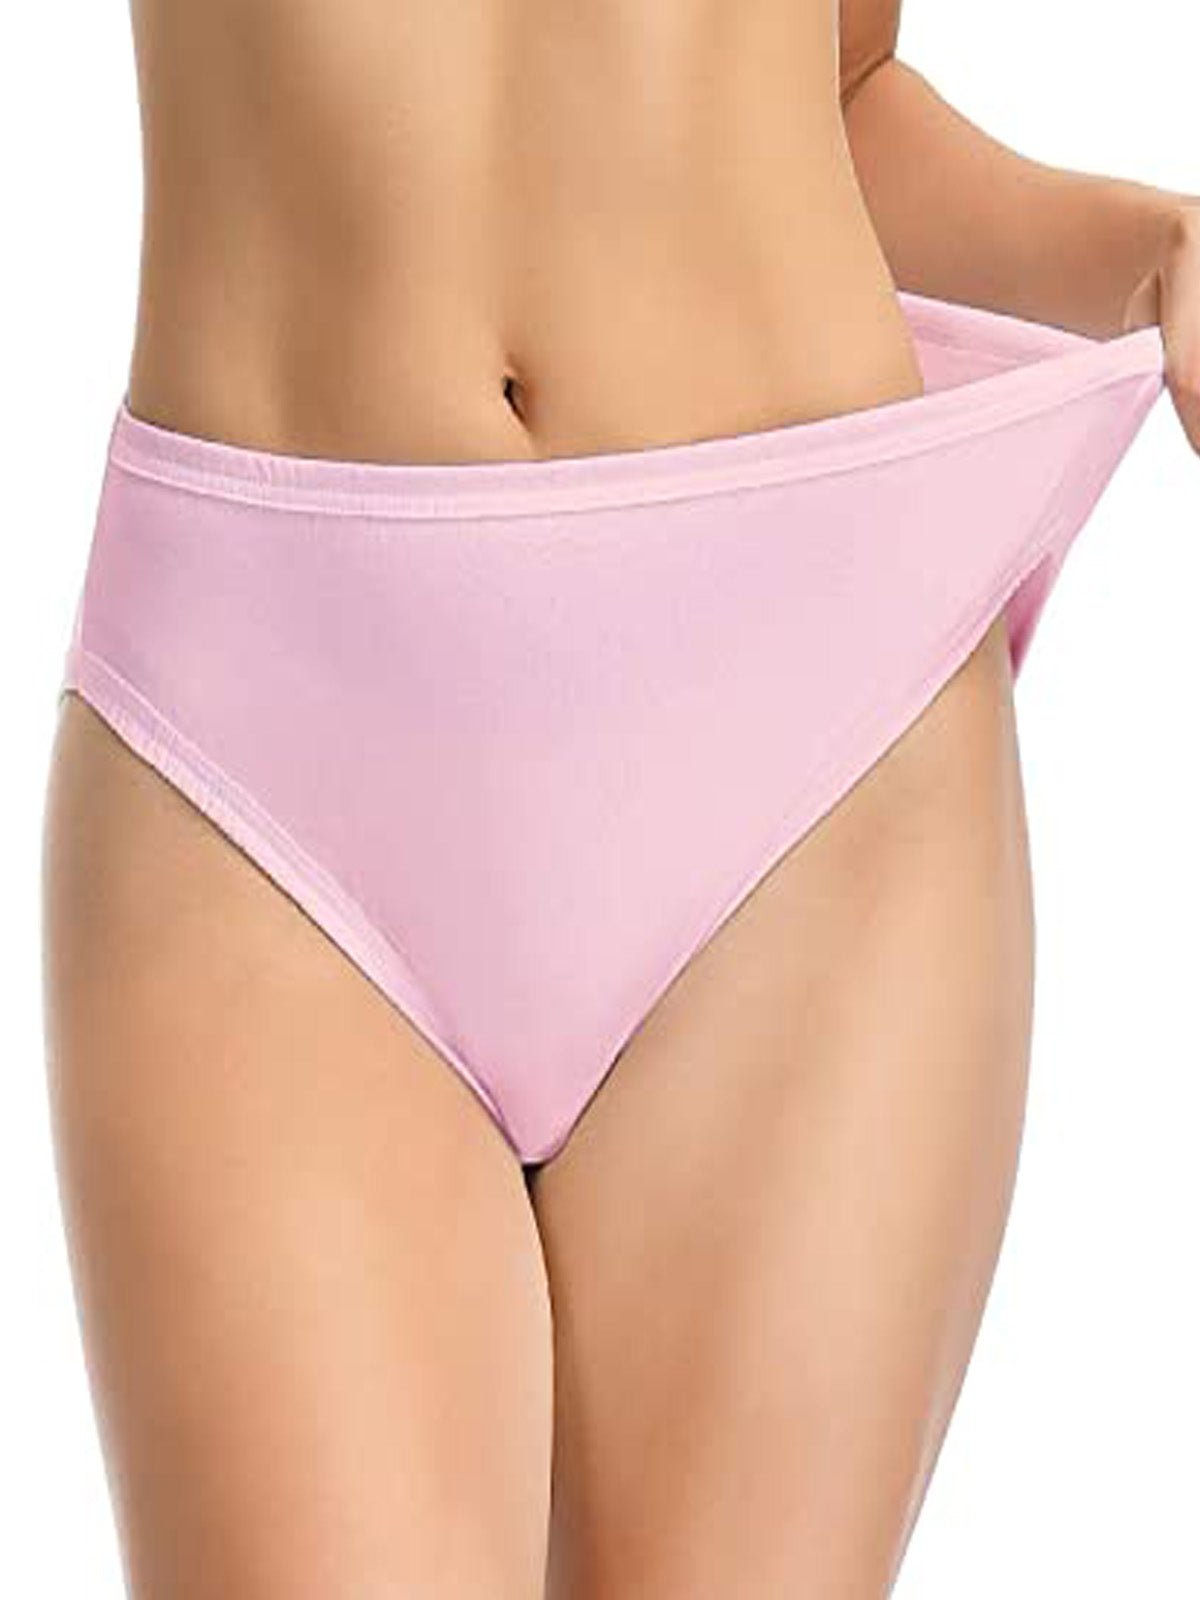 Comfort Soft Cotton Plus Size Underwear High-Cut Brief Panty 3